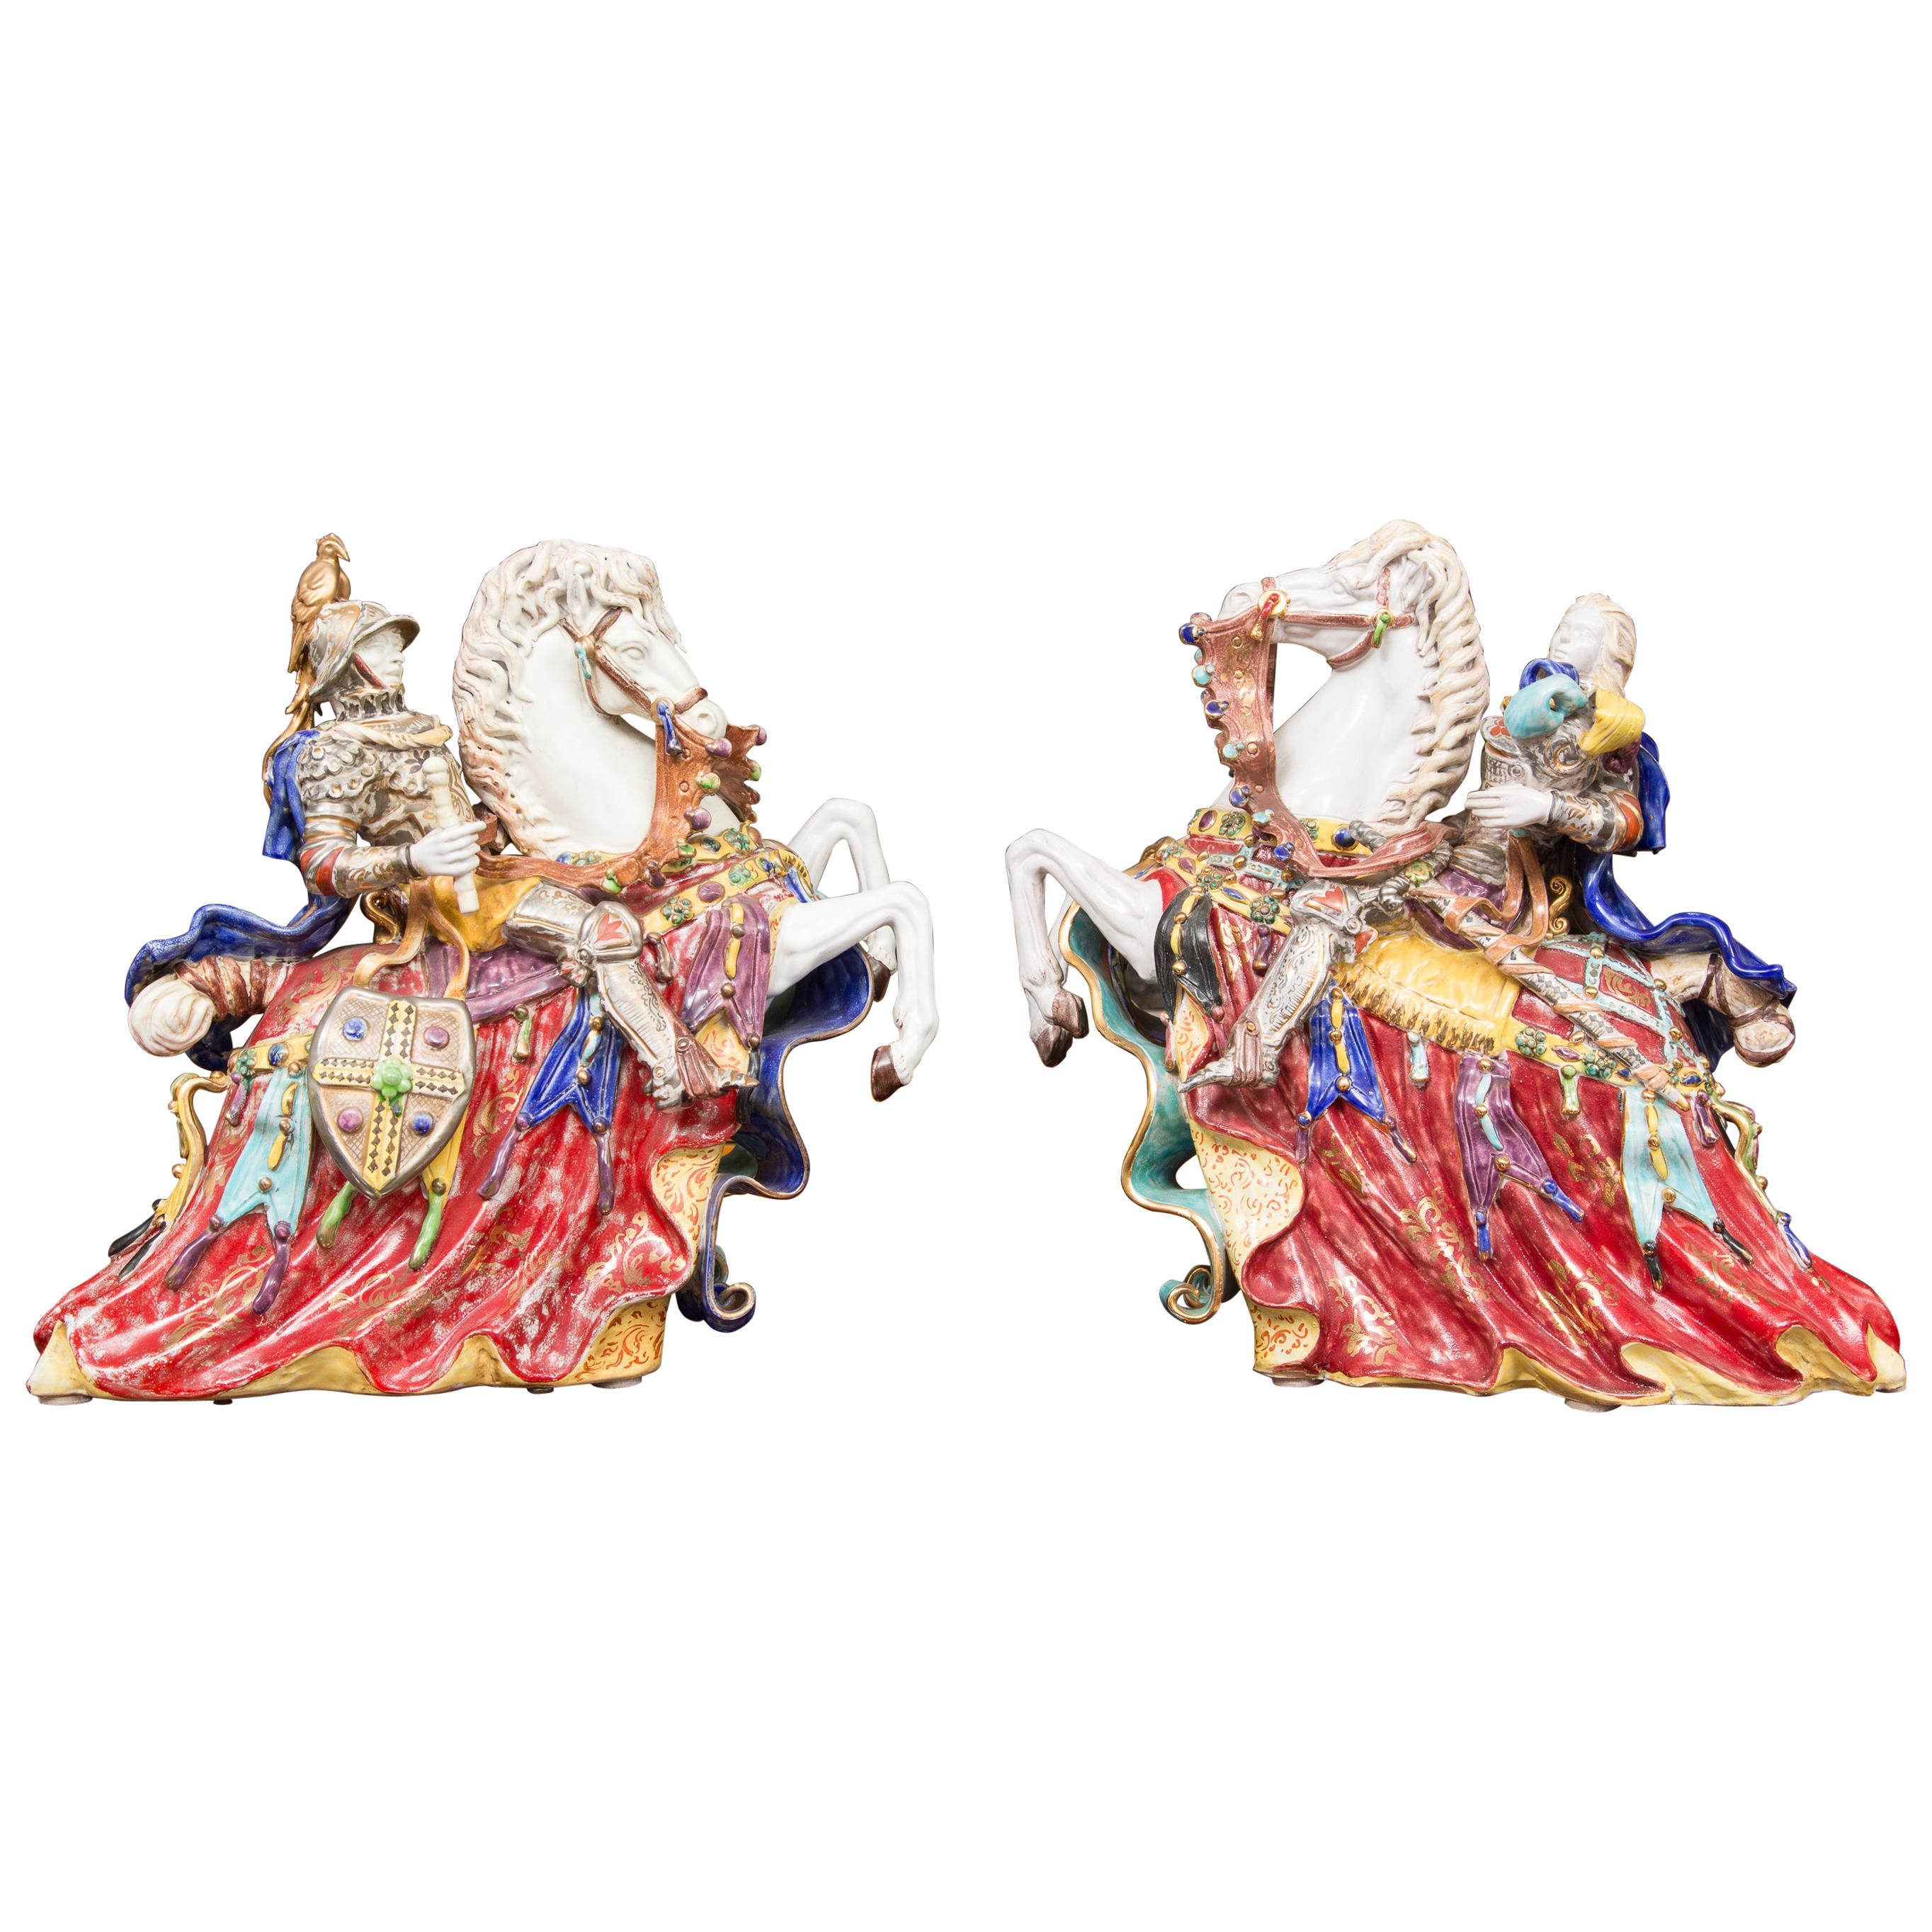 Pair of Colorful Italian Glazed Porcelain Figures